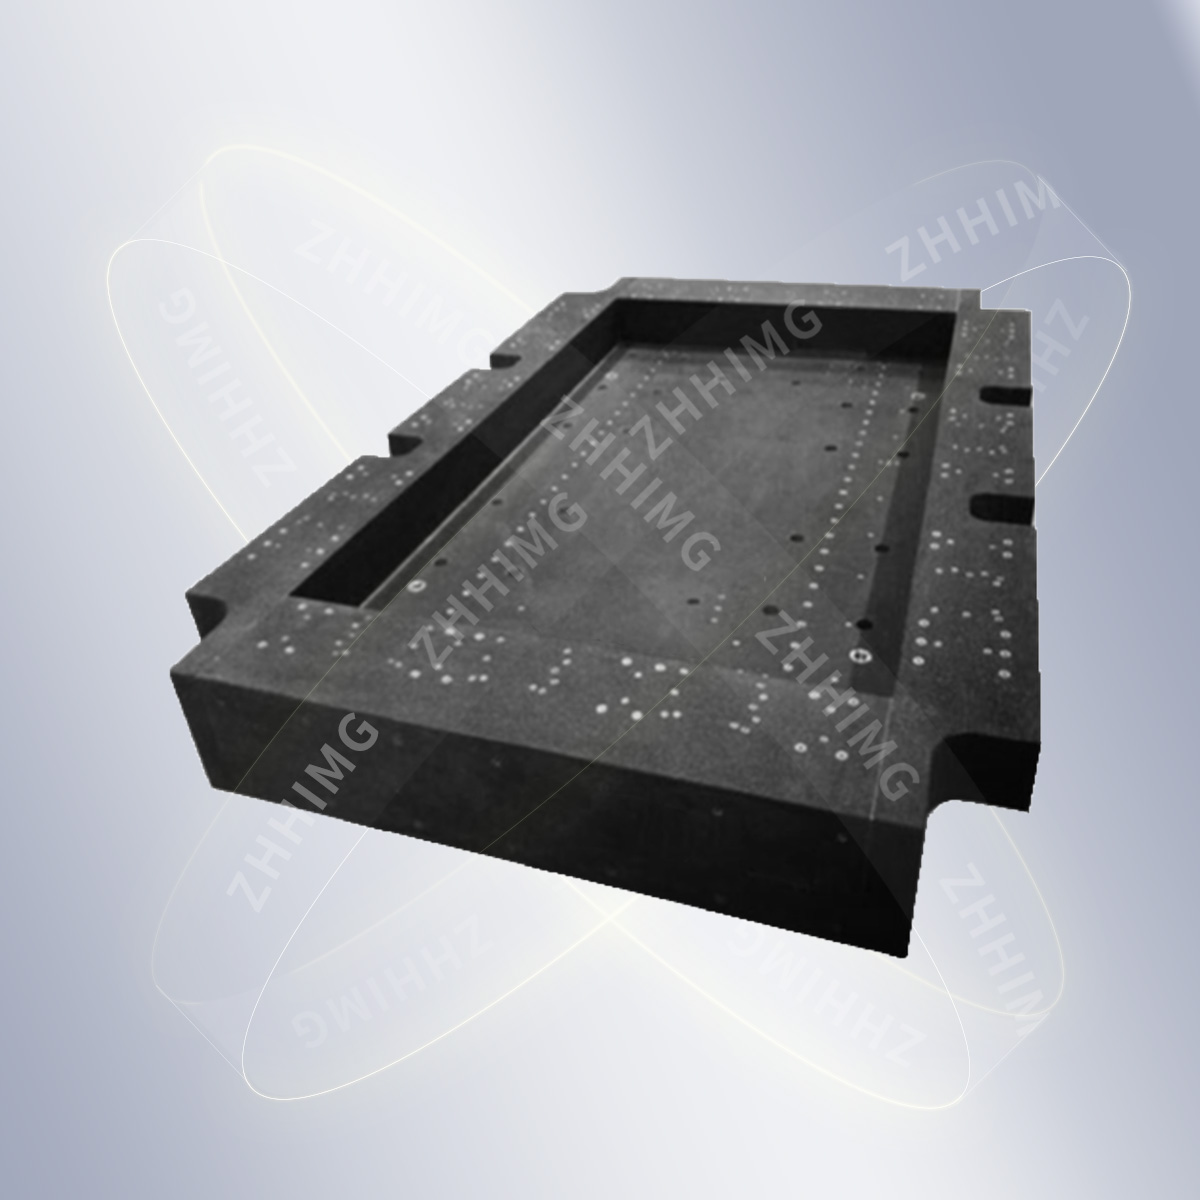 OEM/ODM Supplier Silicon Nitride (Si3n4) - Precision Granite for Semiconductor – ZHONGHUI